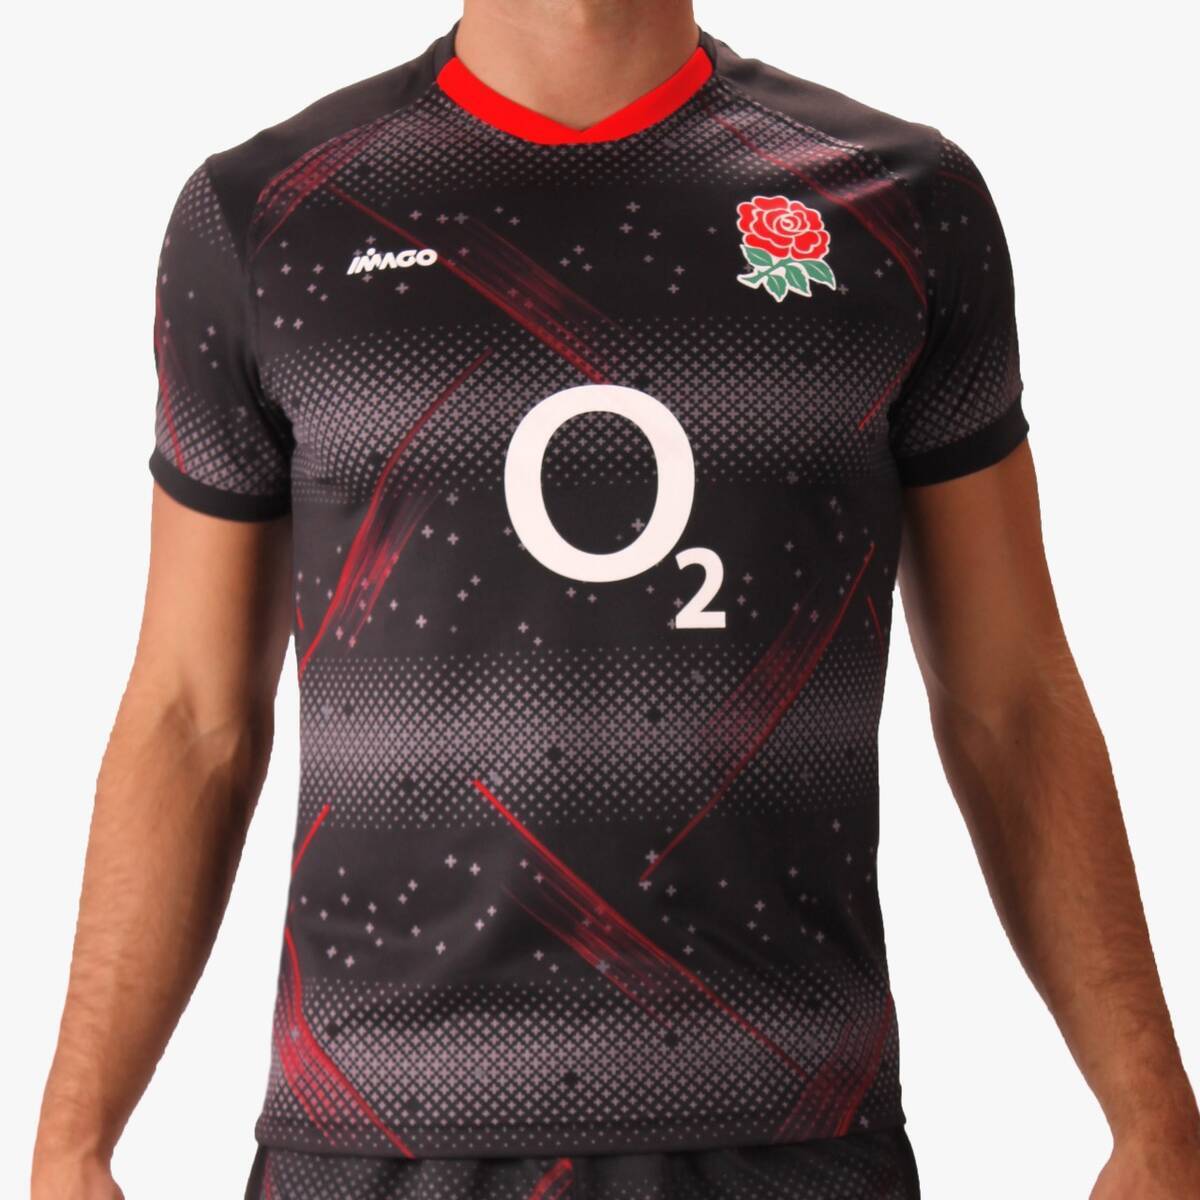 Imagen producto Camiseta Rugby England  7